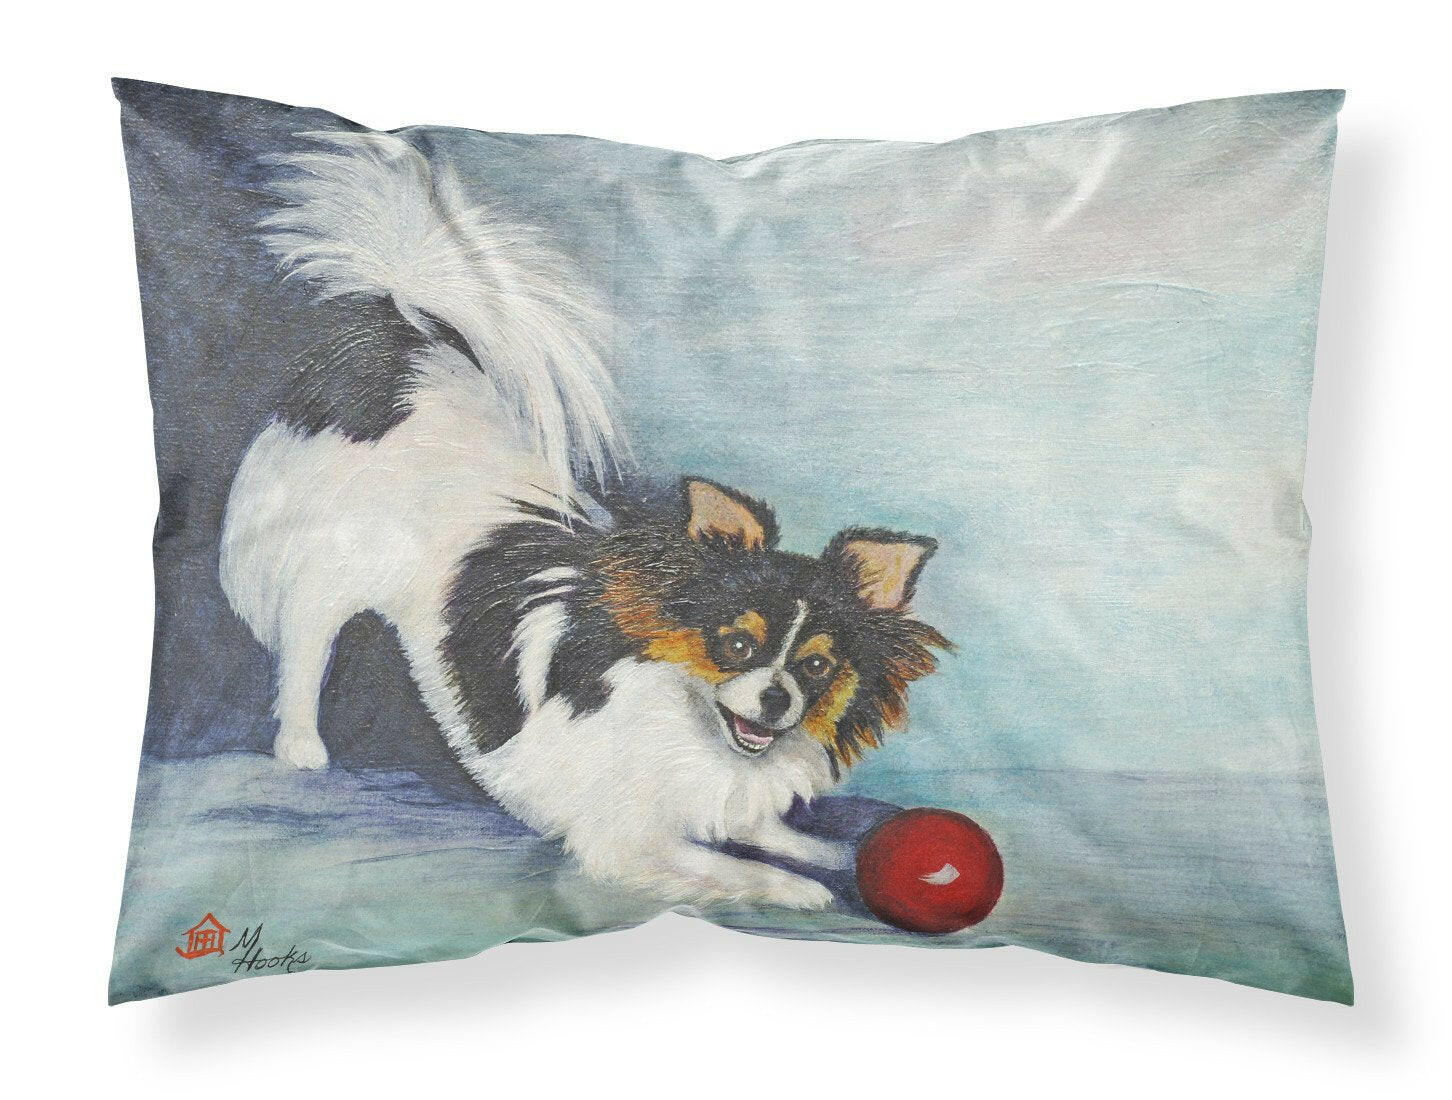 Chihuahua Play Ball Fabric Standard Pillowcase MH1054PILLOWCASE by Caroline's Treasures